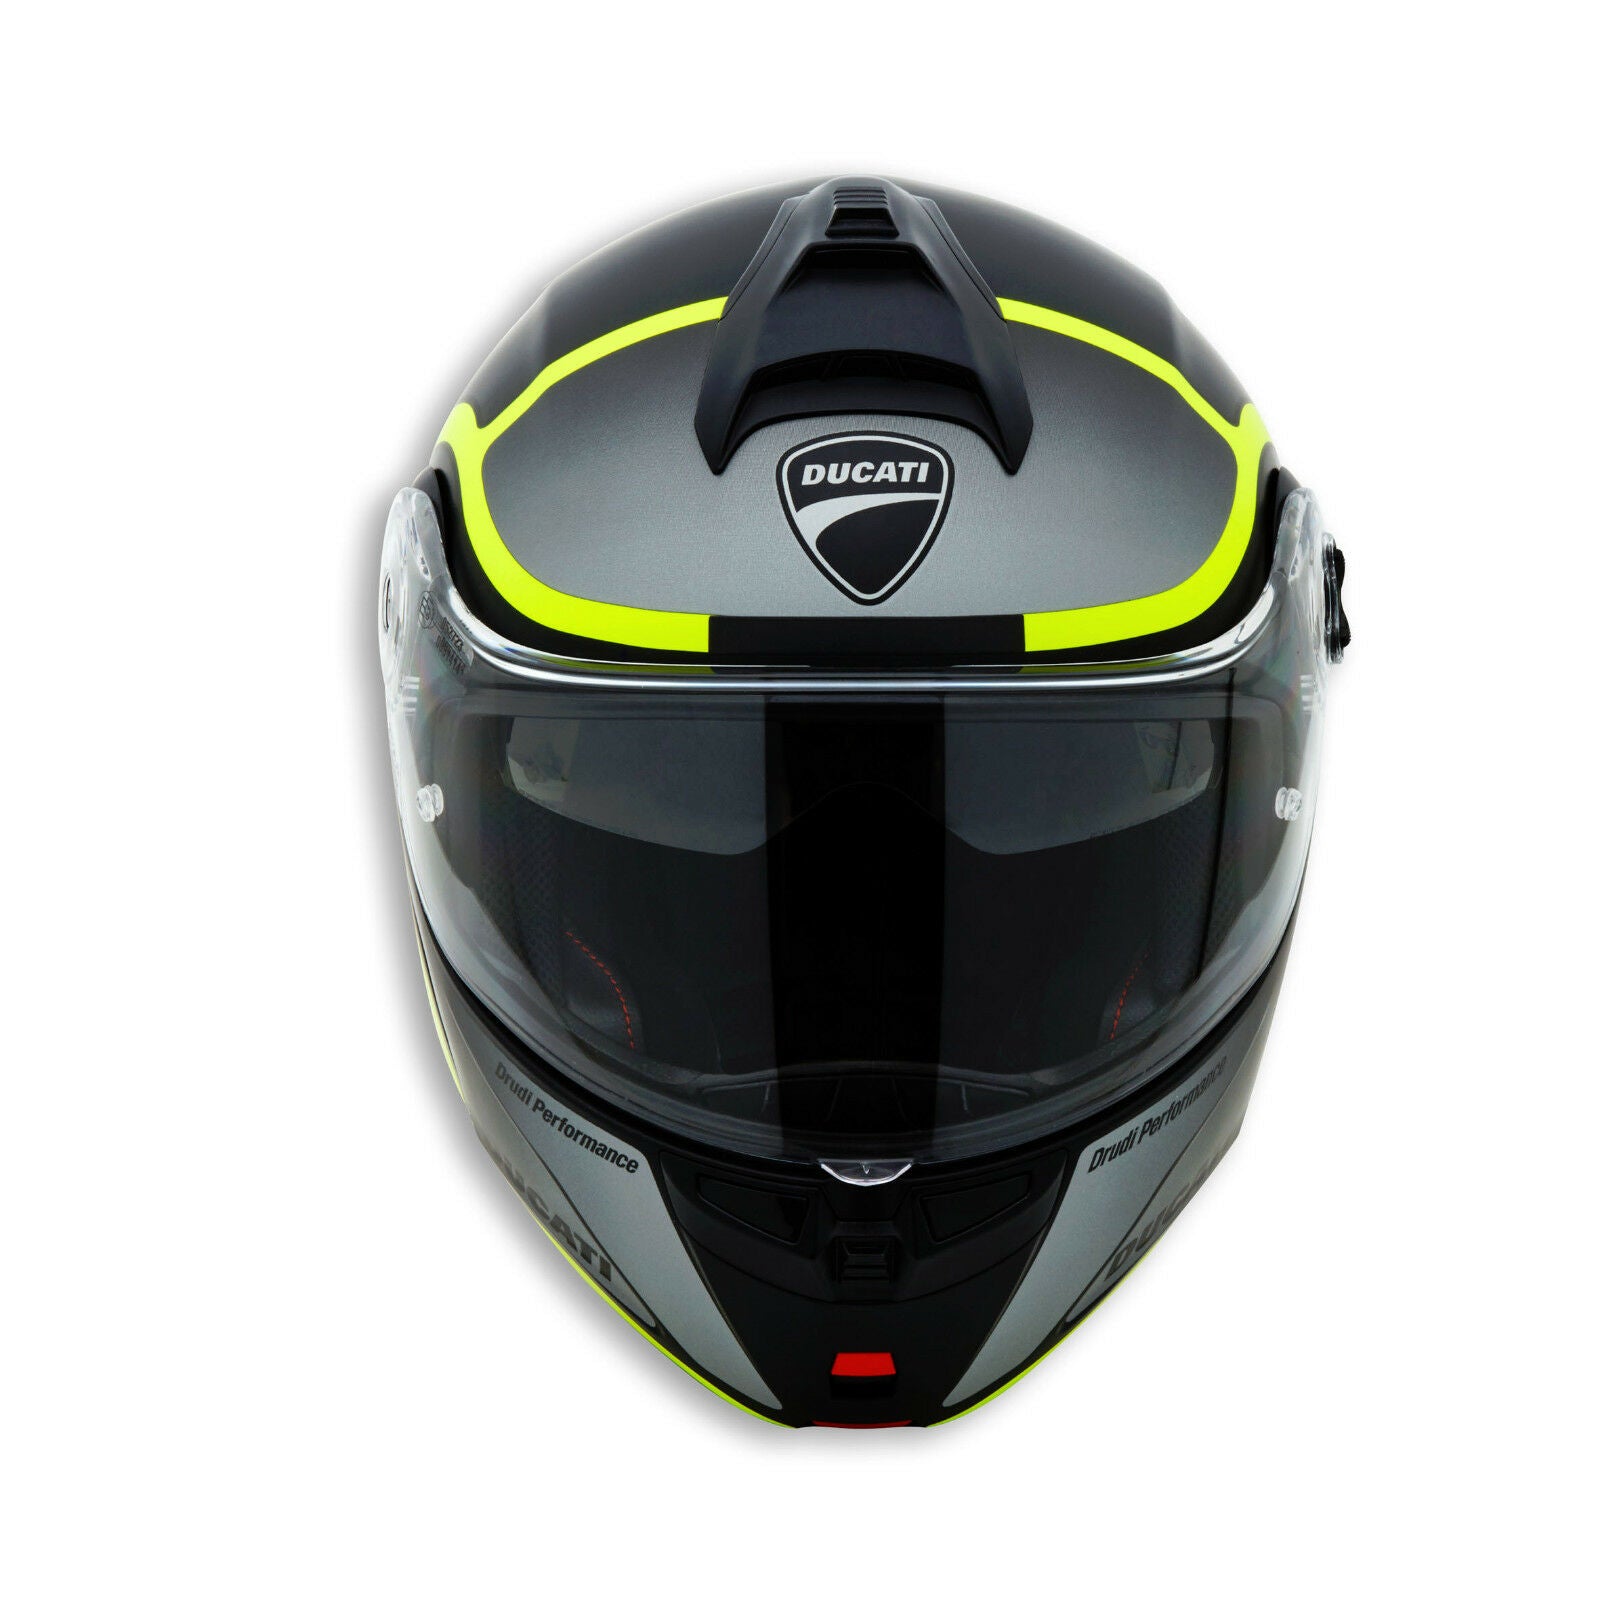 Ducati Horizon Hi-Viz Helmet By X-lite 98104228 NEW DUCATI ORIGINAL O.E.Performa